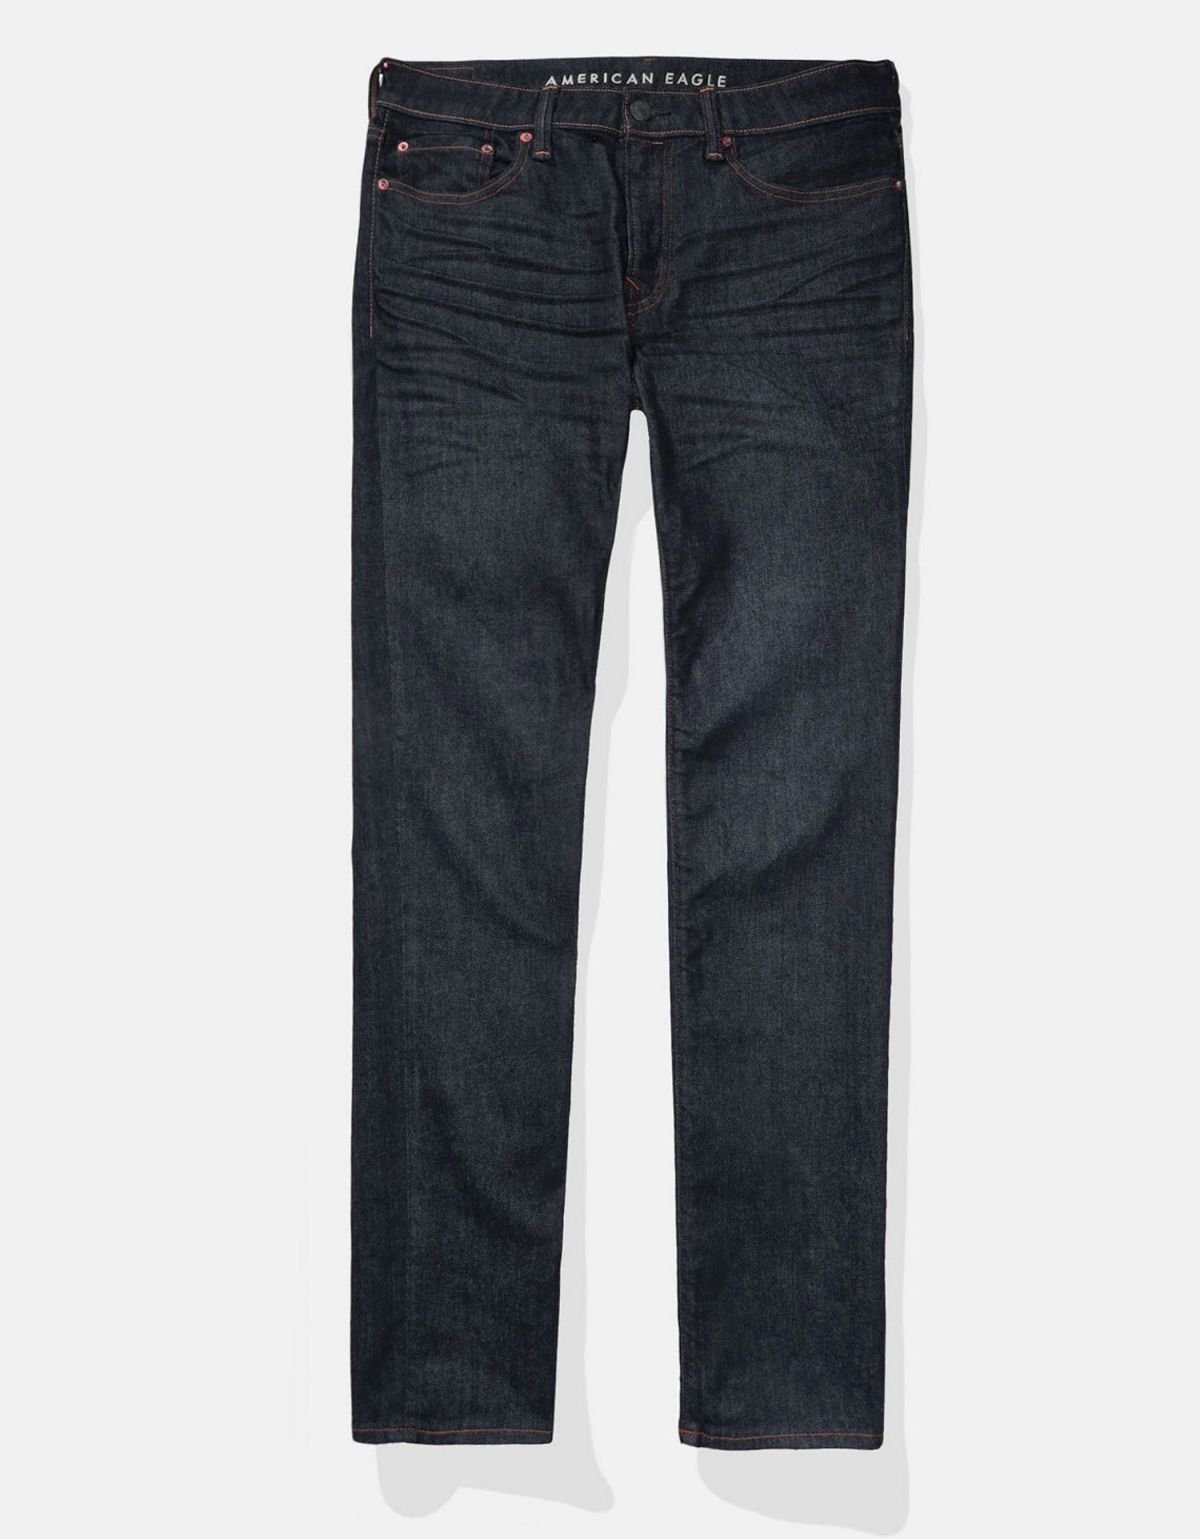  מכנסי ג'ינס INTL EXCLUSIV של AMERICAN EAGLE